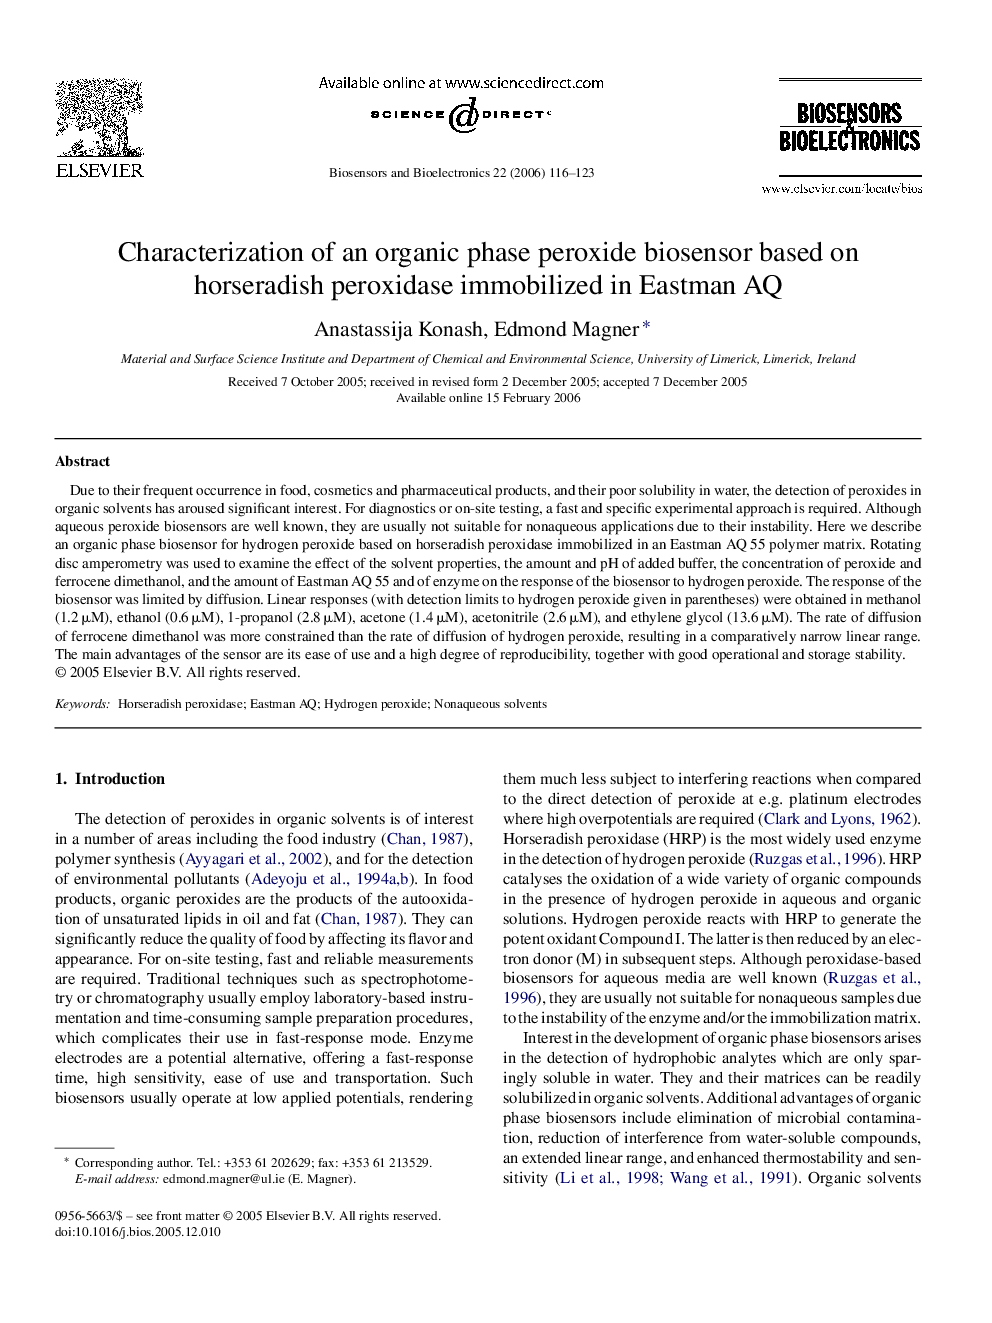 Characterization of an organic phase peroxide biosensor based on horseradish peroxidase immobilized in Eastman AQ